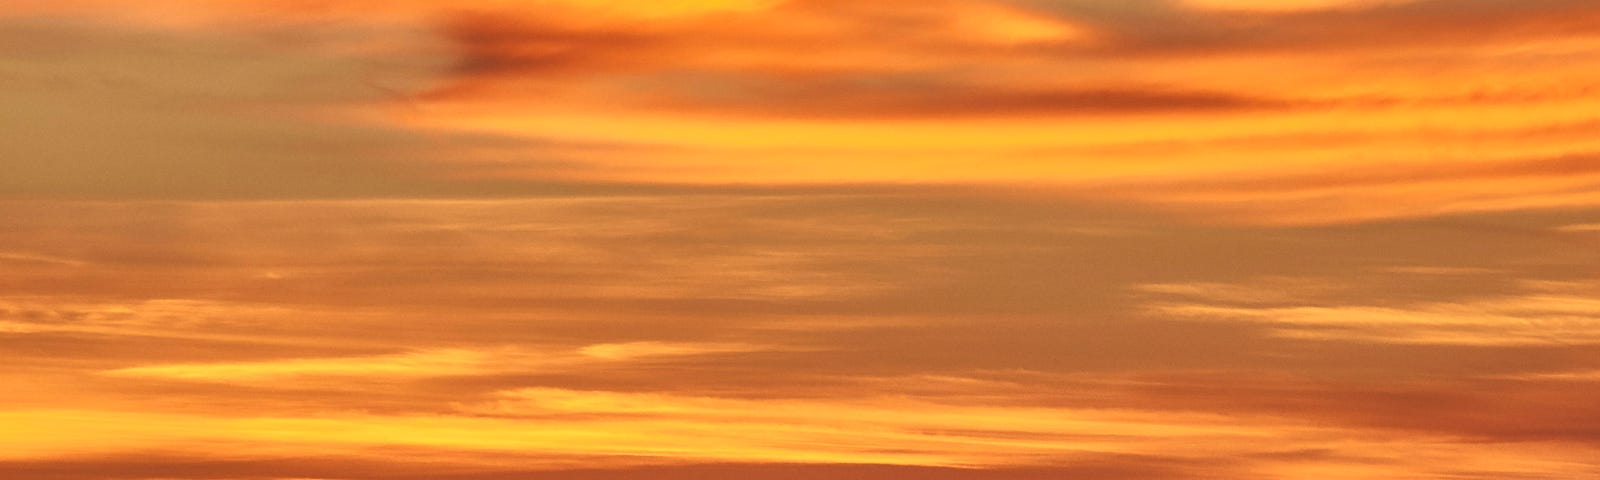 A cargo ship passes along the horizon during a dusk with a rich orange sky